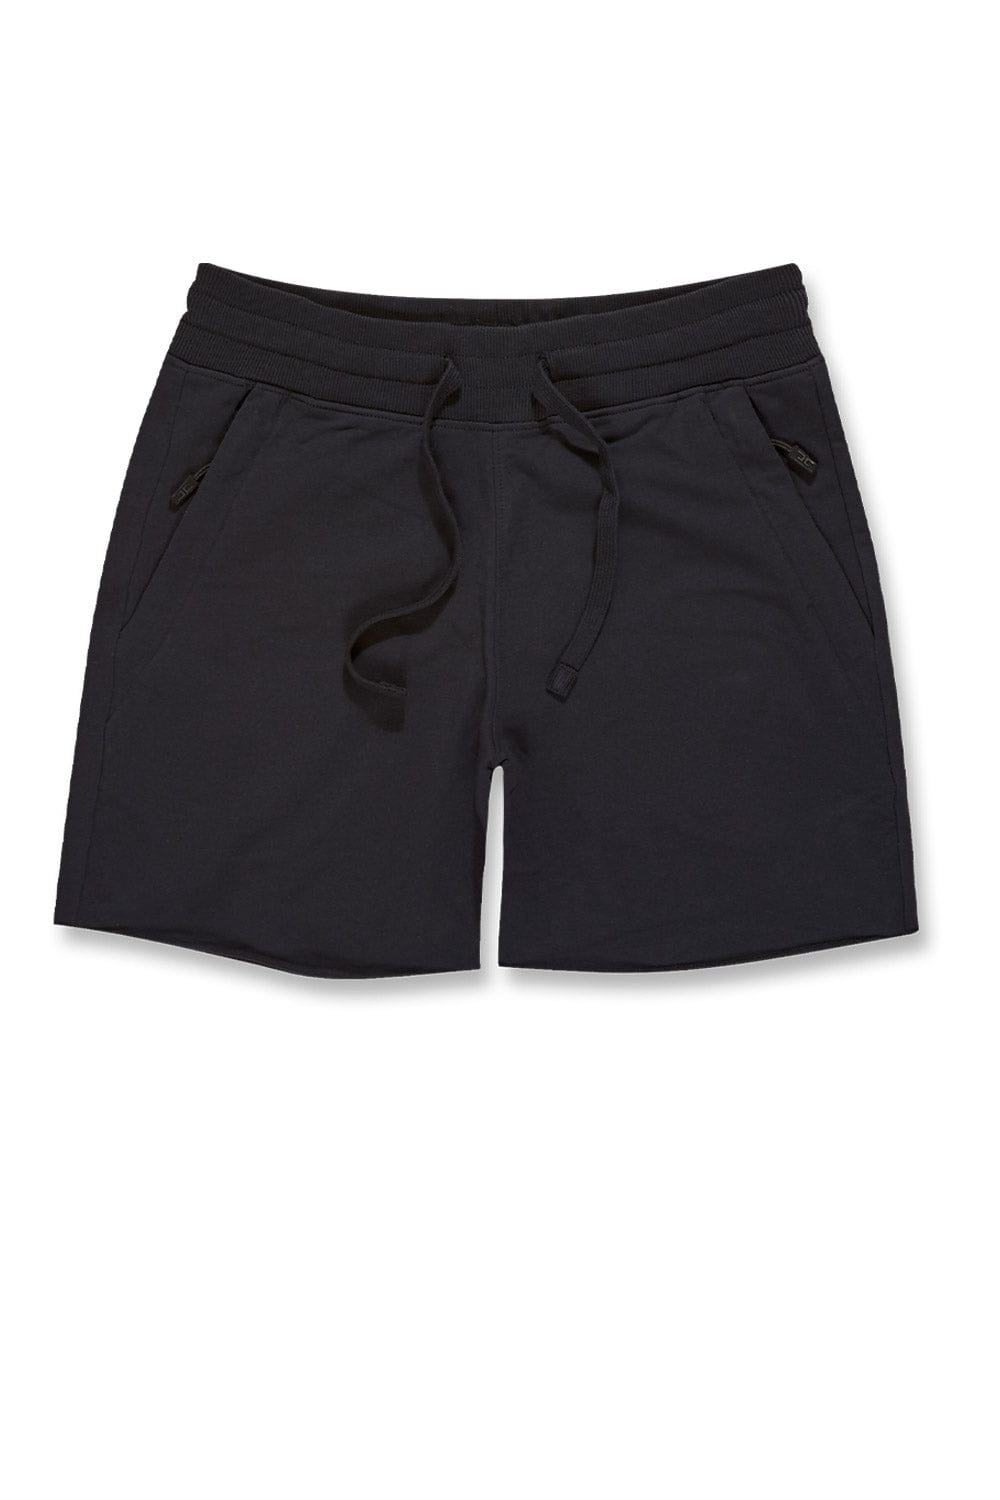 Jordan Craig Athletic - Summer Breeze Knit Shorts Navy / S